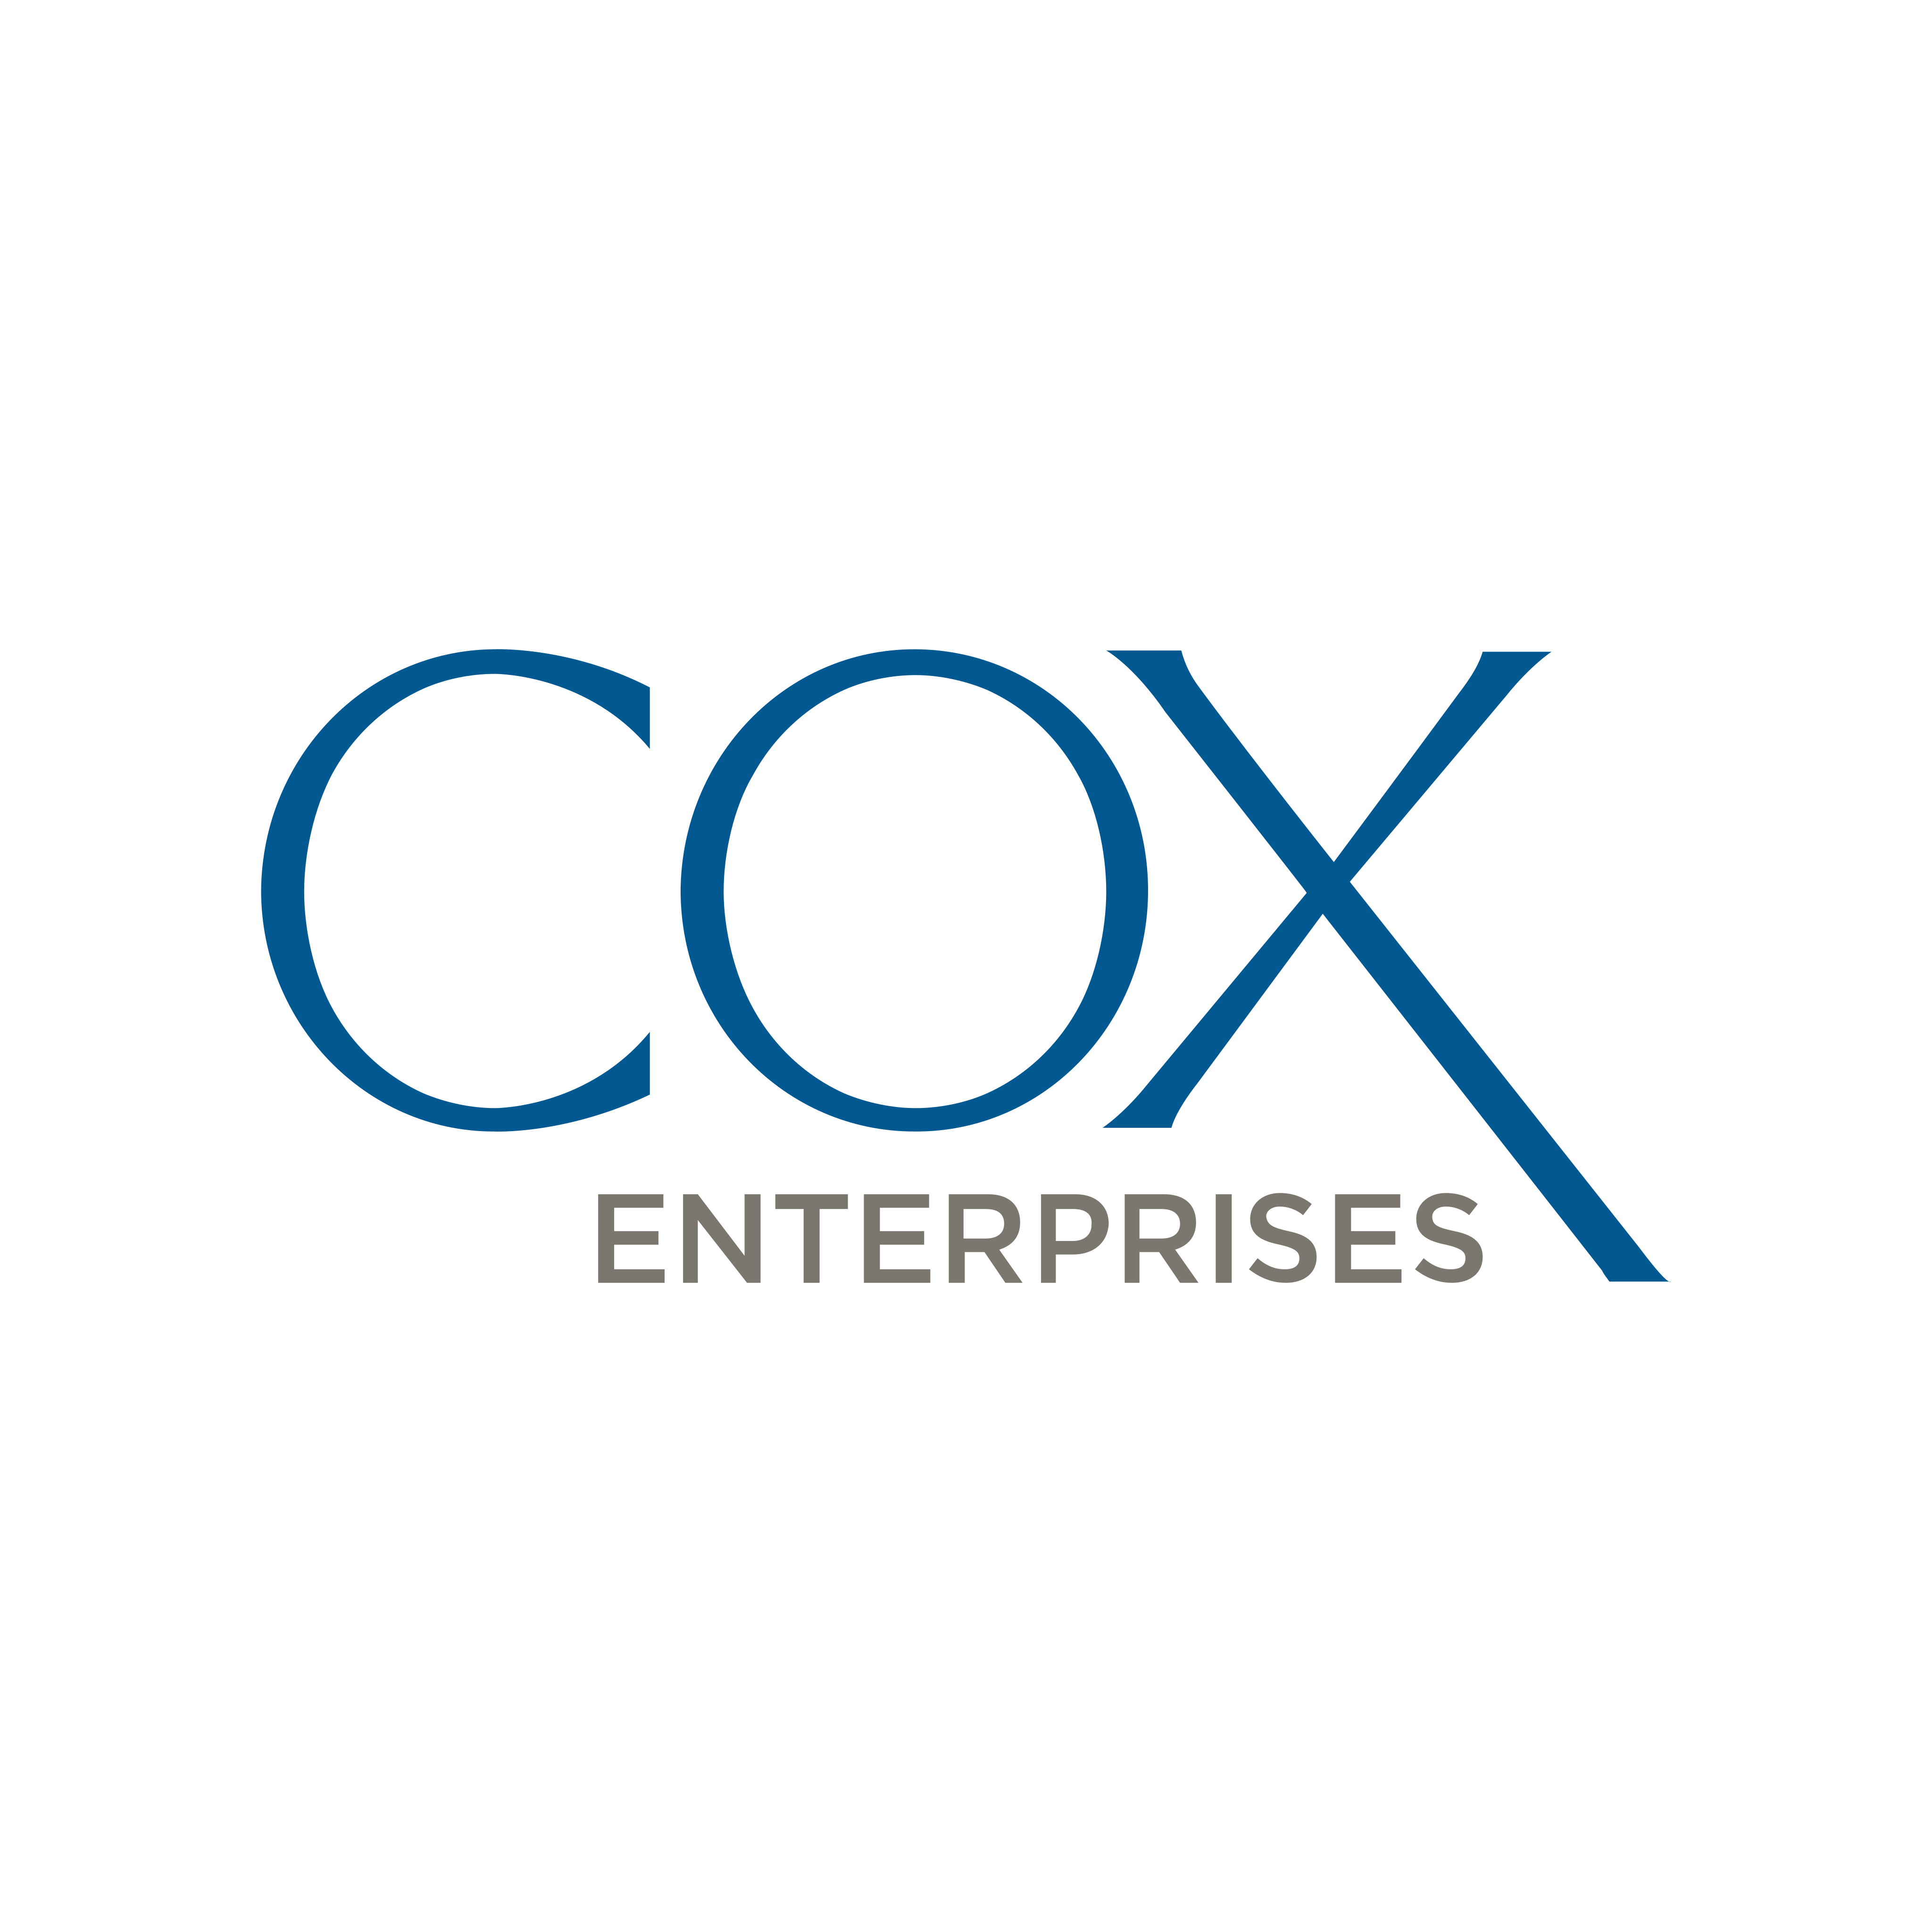 Cox Enterprises Logo PNG.